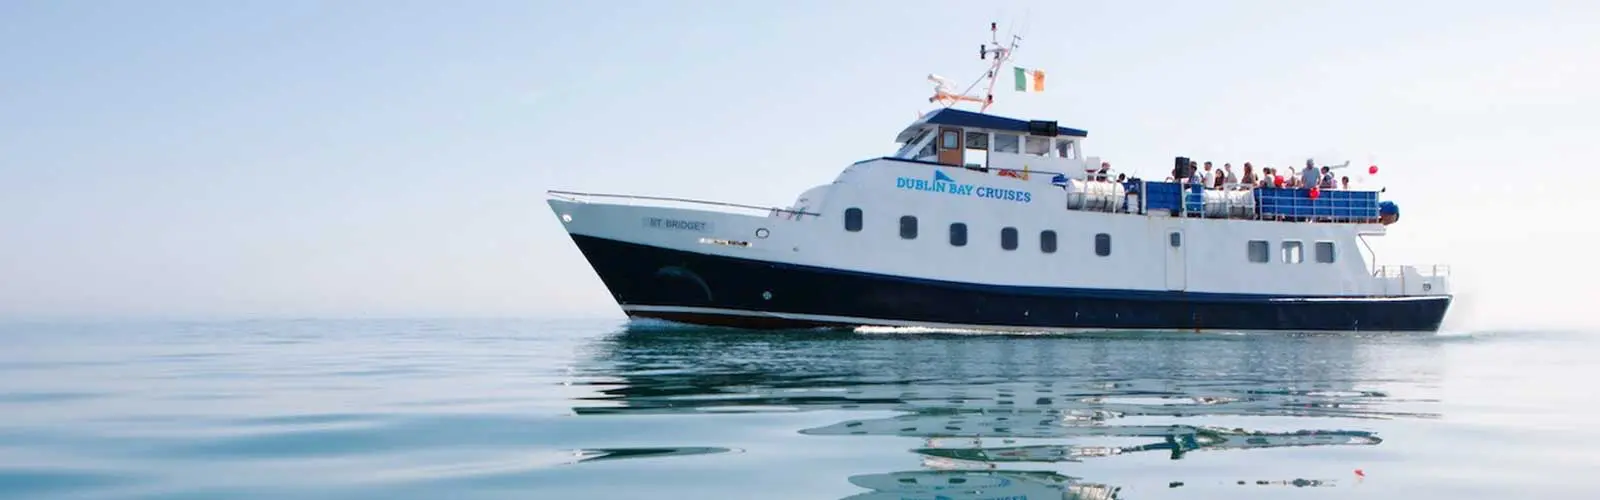 St Bridget Dublin Bay Cruises Boat